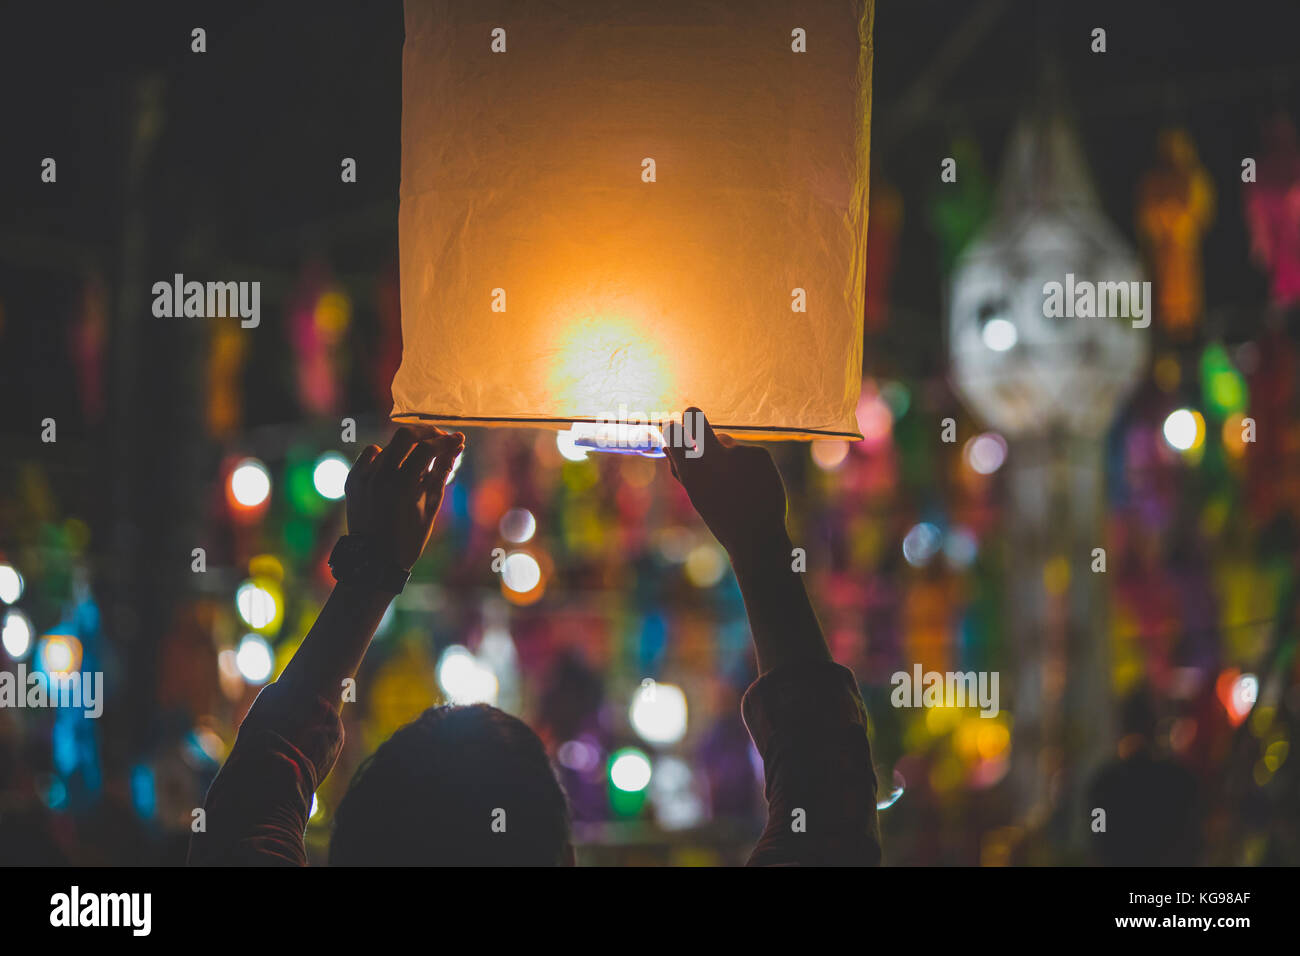 Loy Krathong Festival Themed Photo Stock Photo